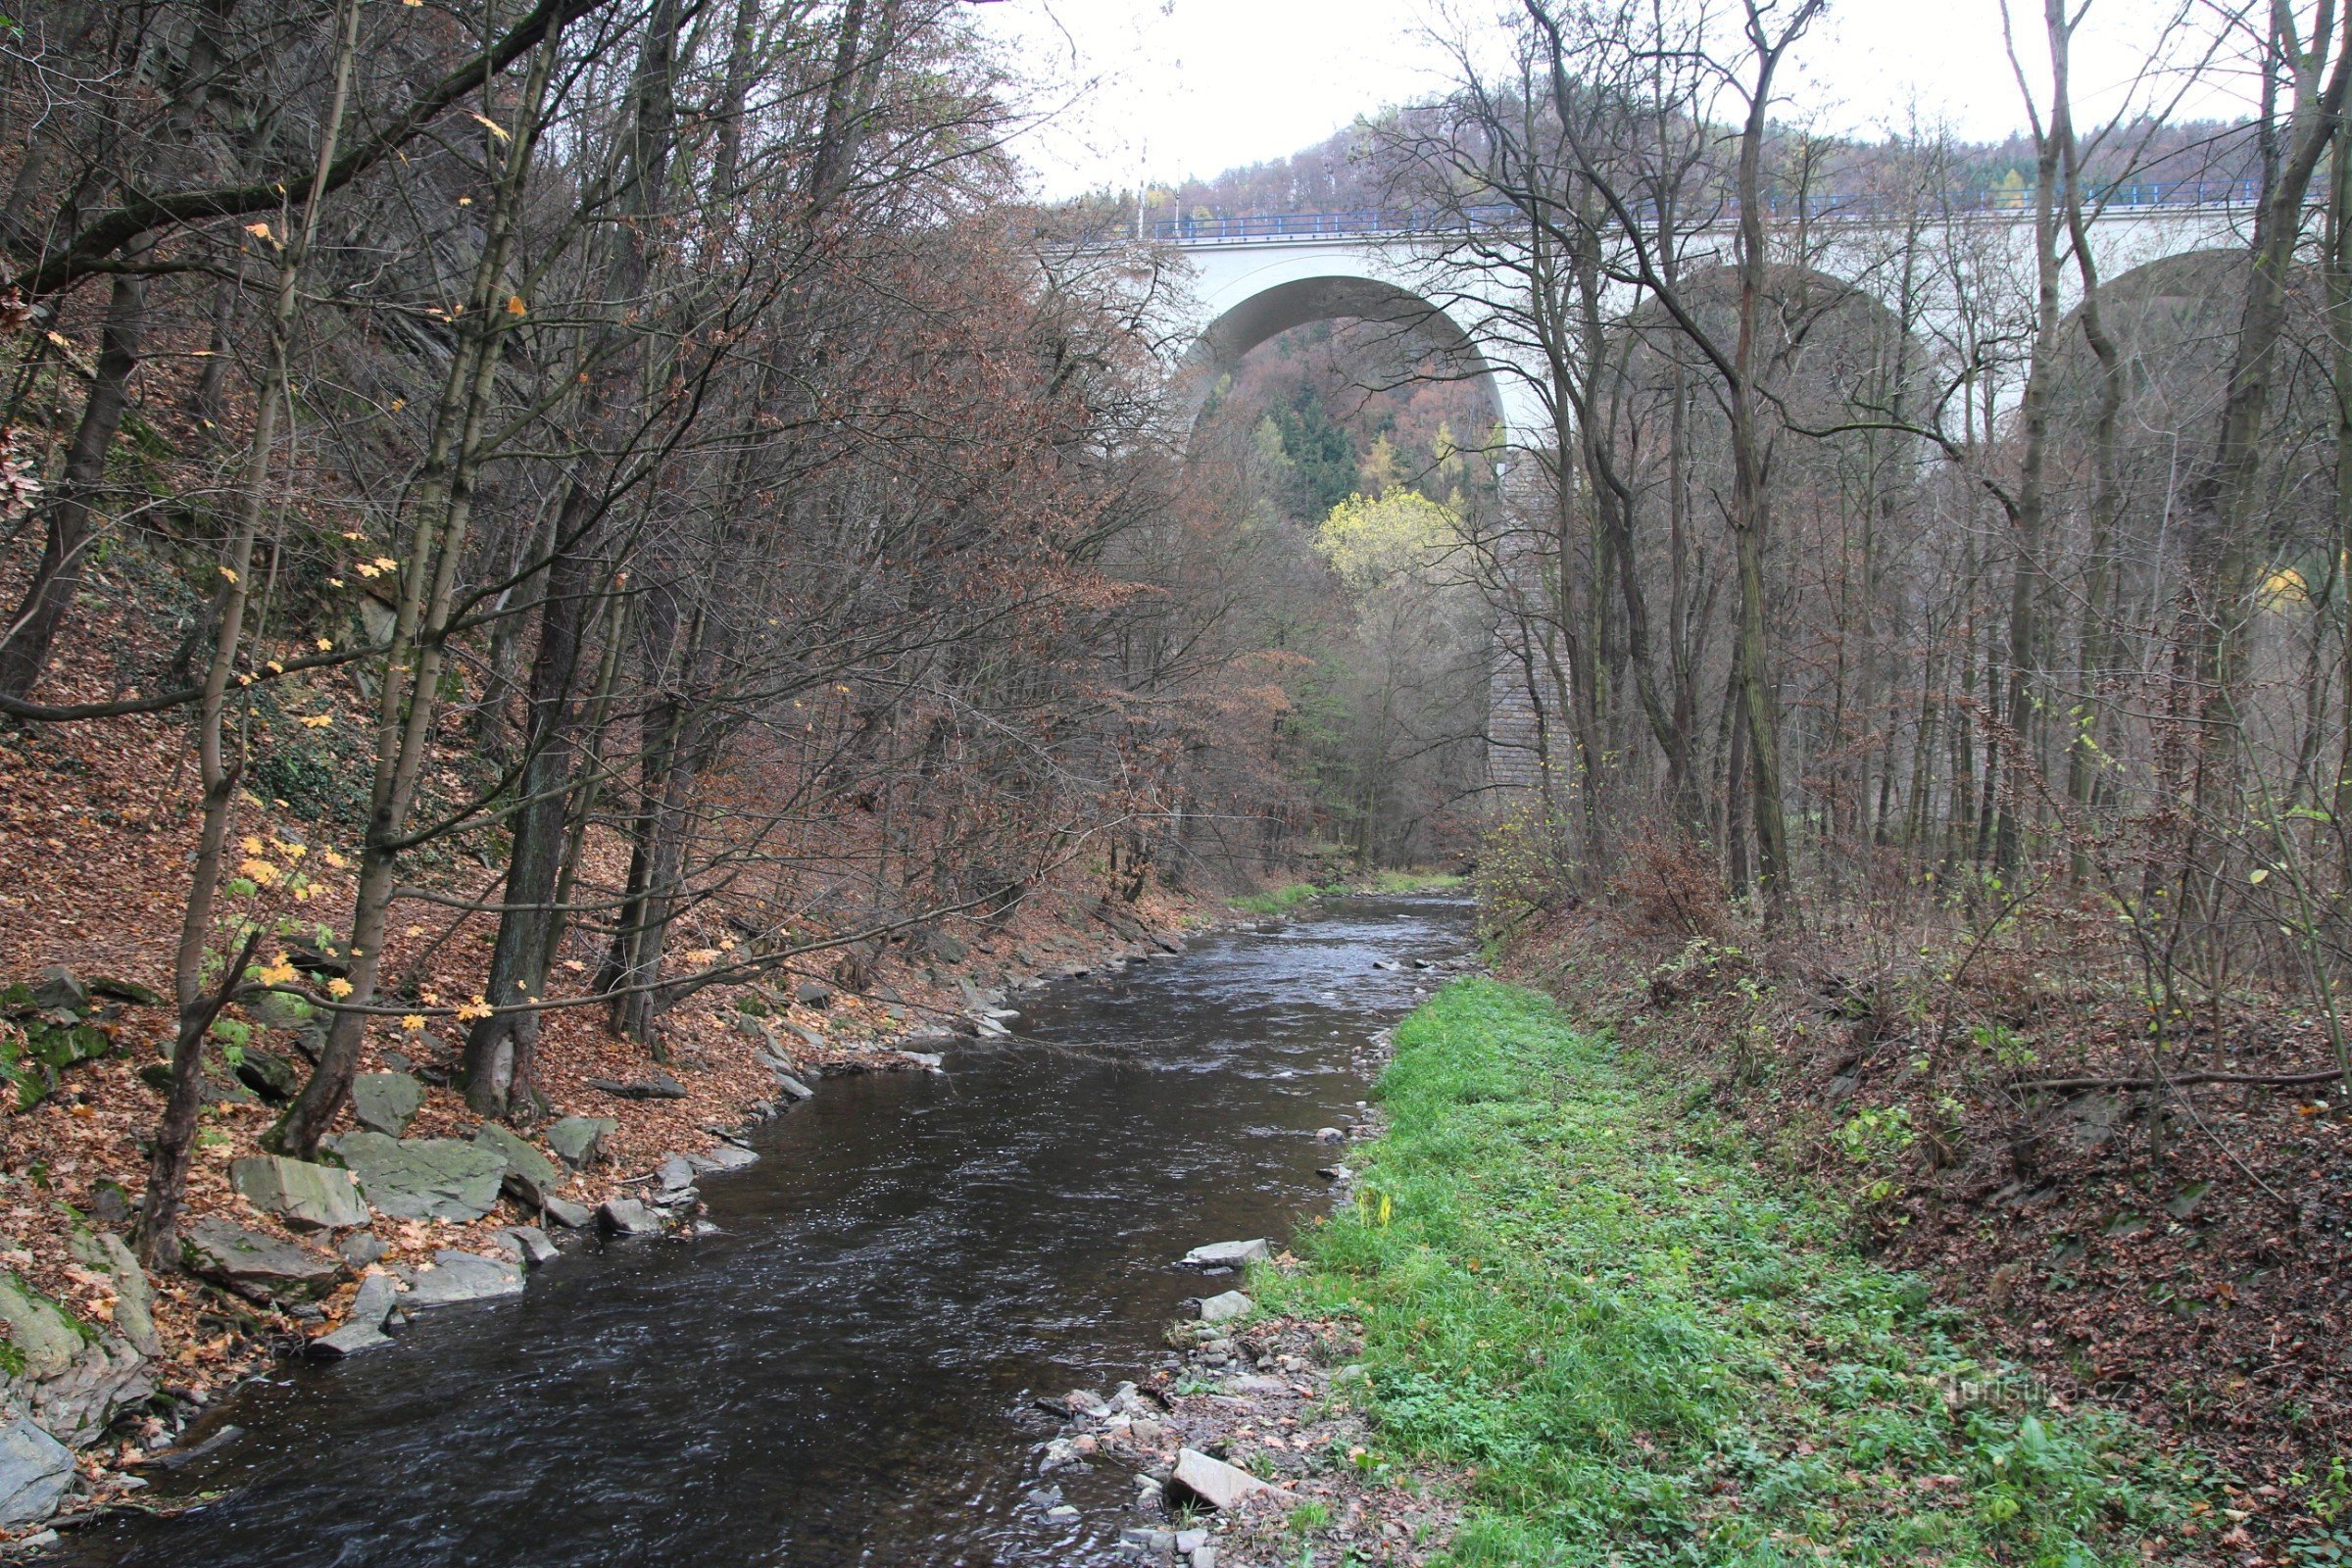 Railway viaduct with Loučka river